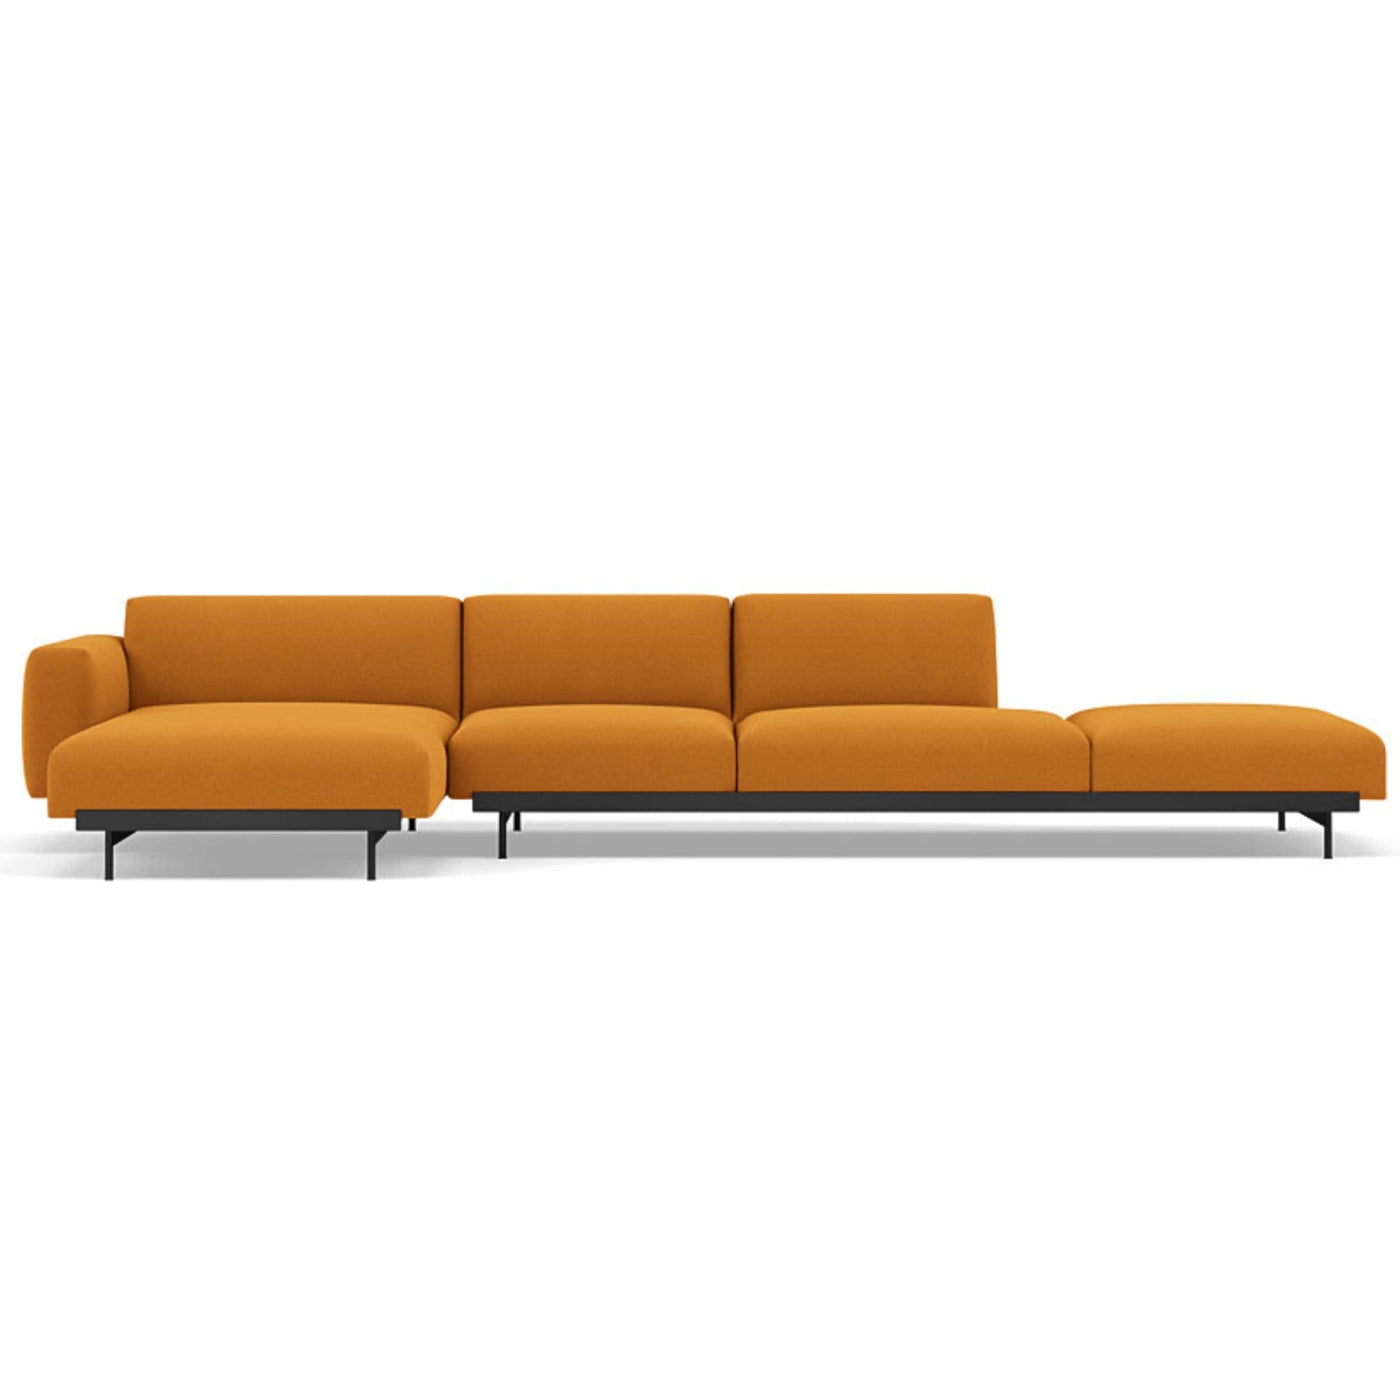 Muuto In Situ Modular 4 Seater Sofa configuration 5 in vidar 472. Made to order from someday designs. #colour_vidar-472